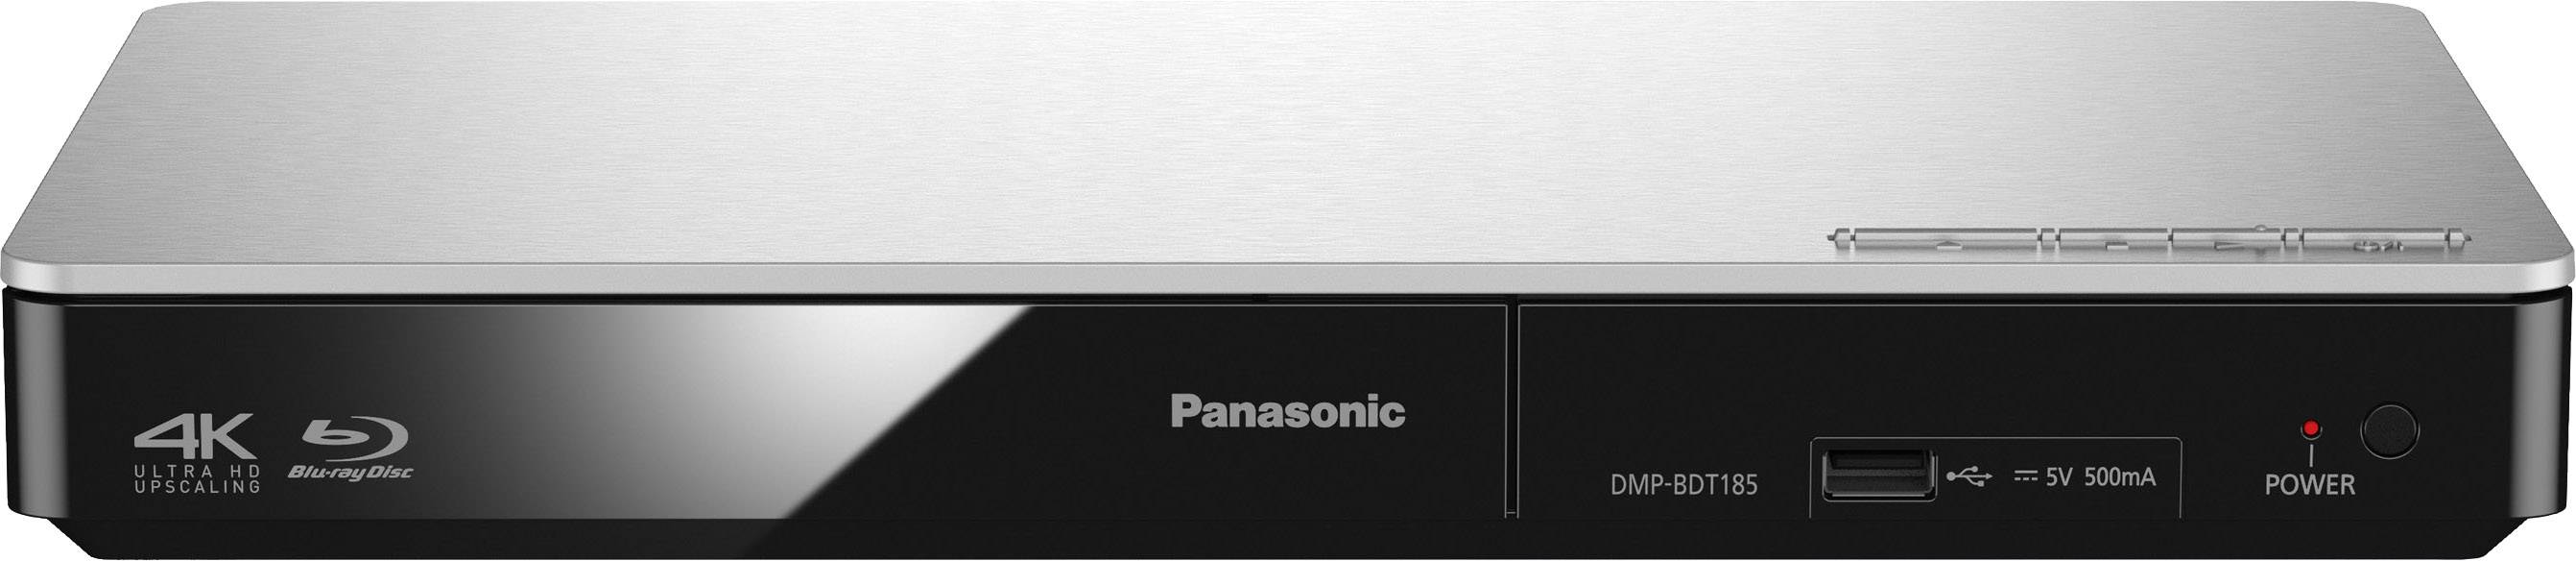 Buy Panasonic DMP-BDT185 3D Blu-ray | 4K Silver player Electronic Conrad upscaling